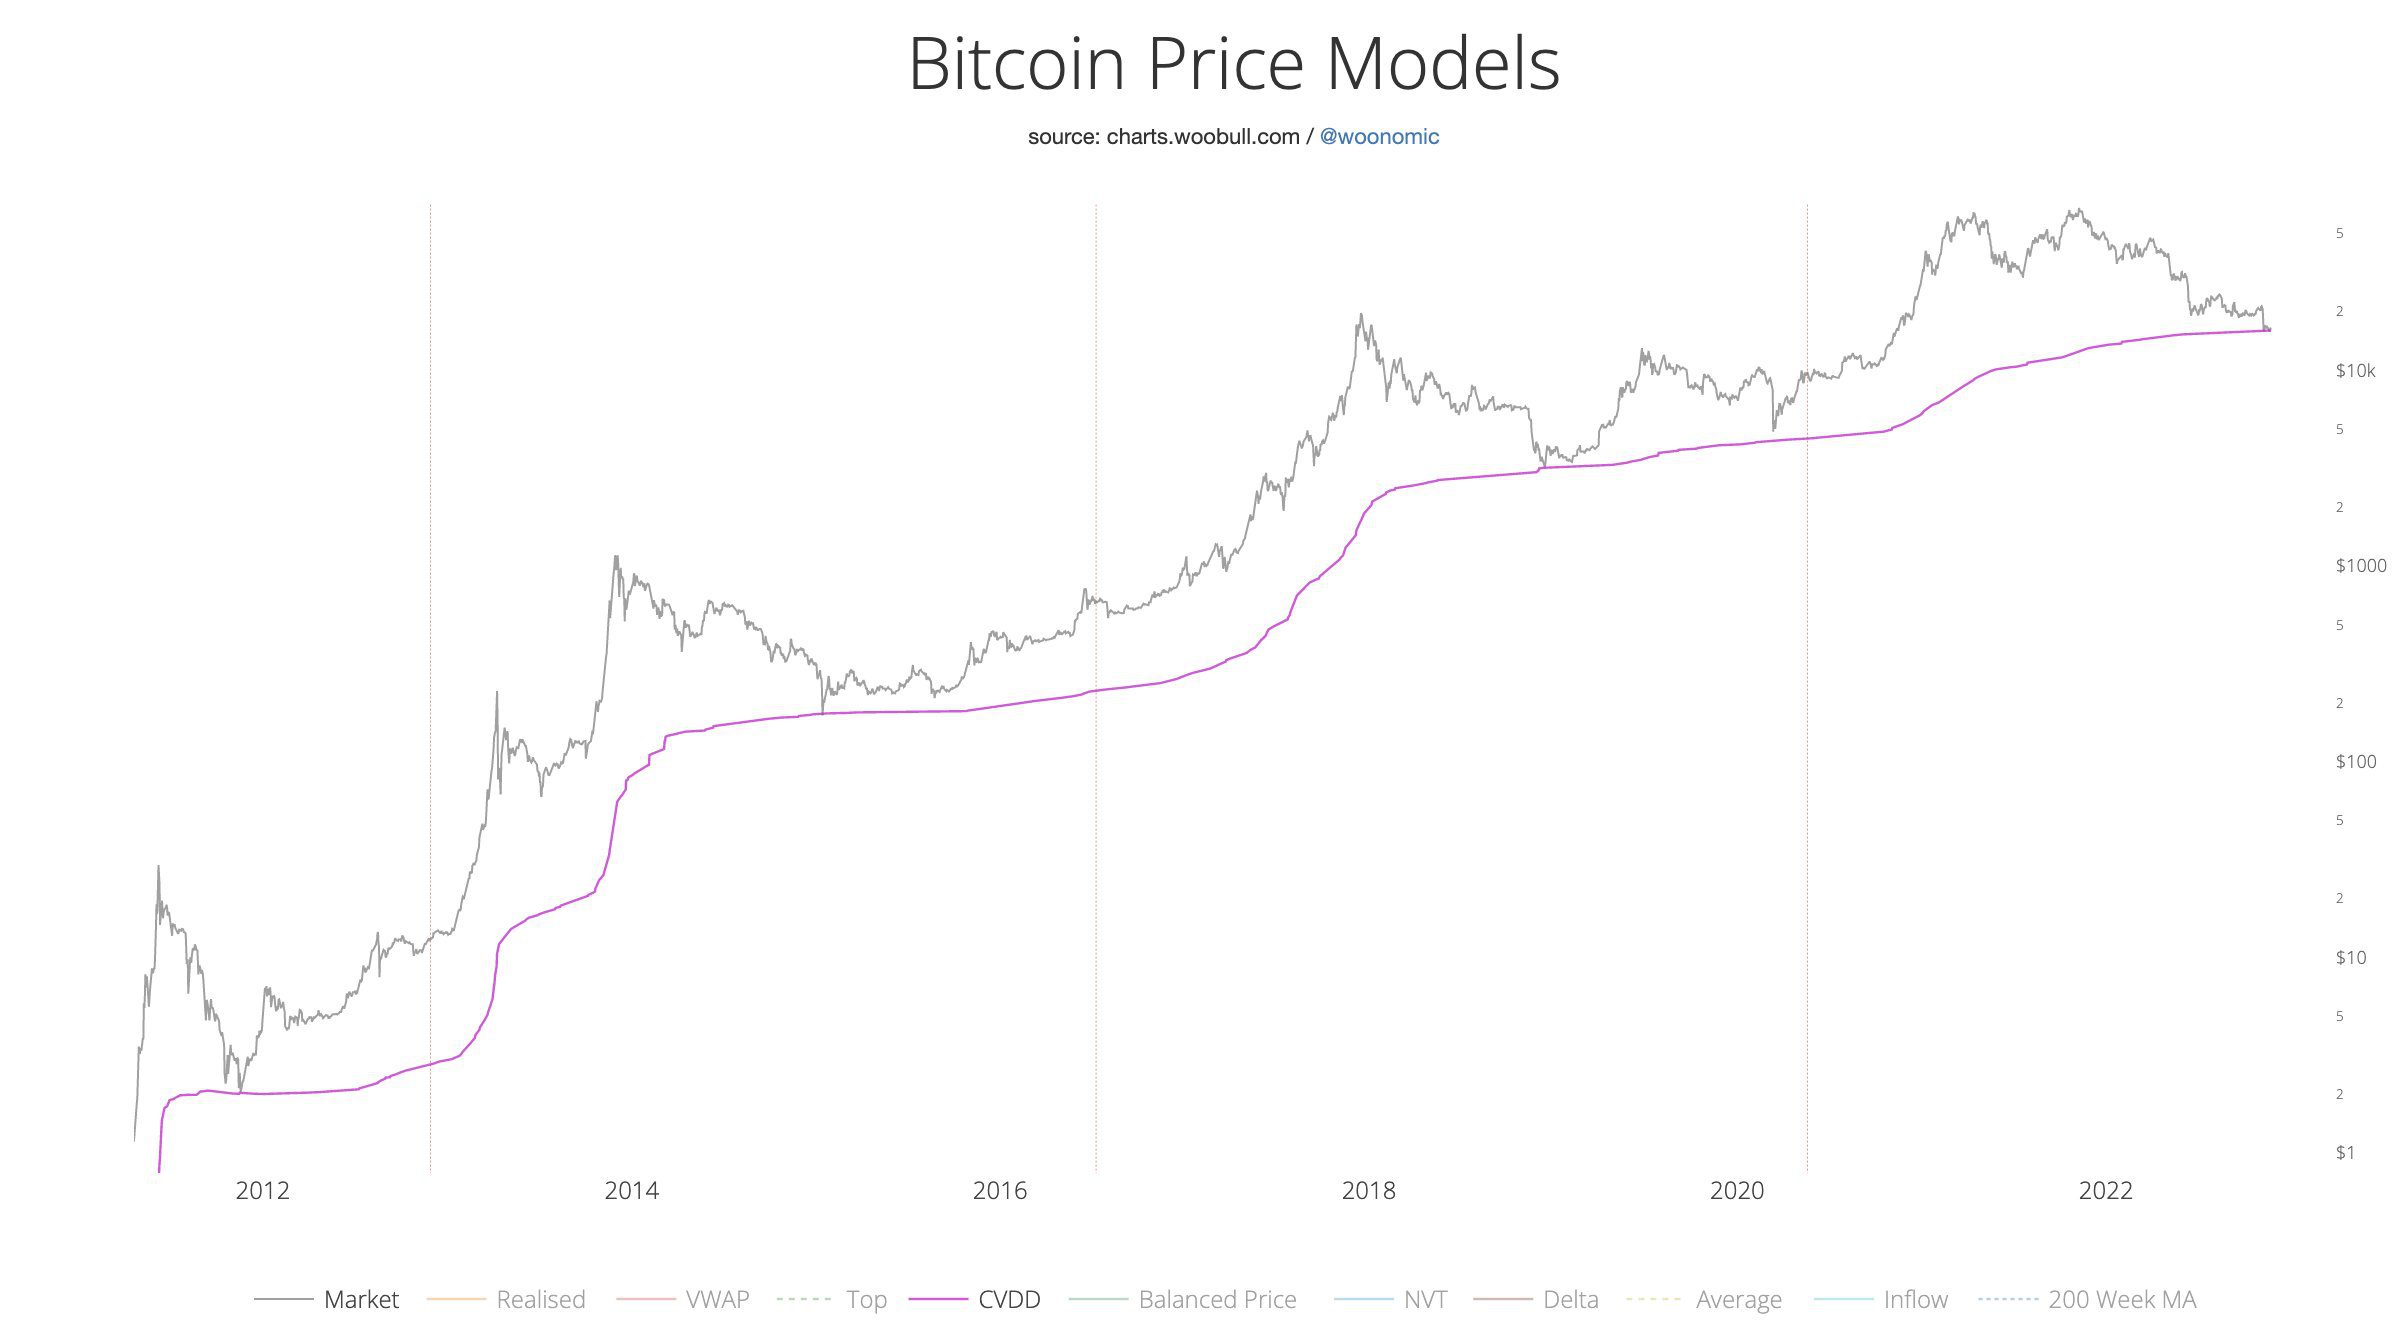 Bitcoin price models